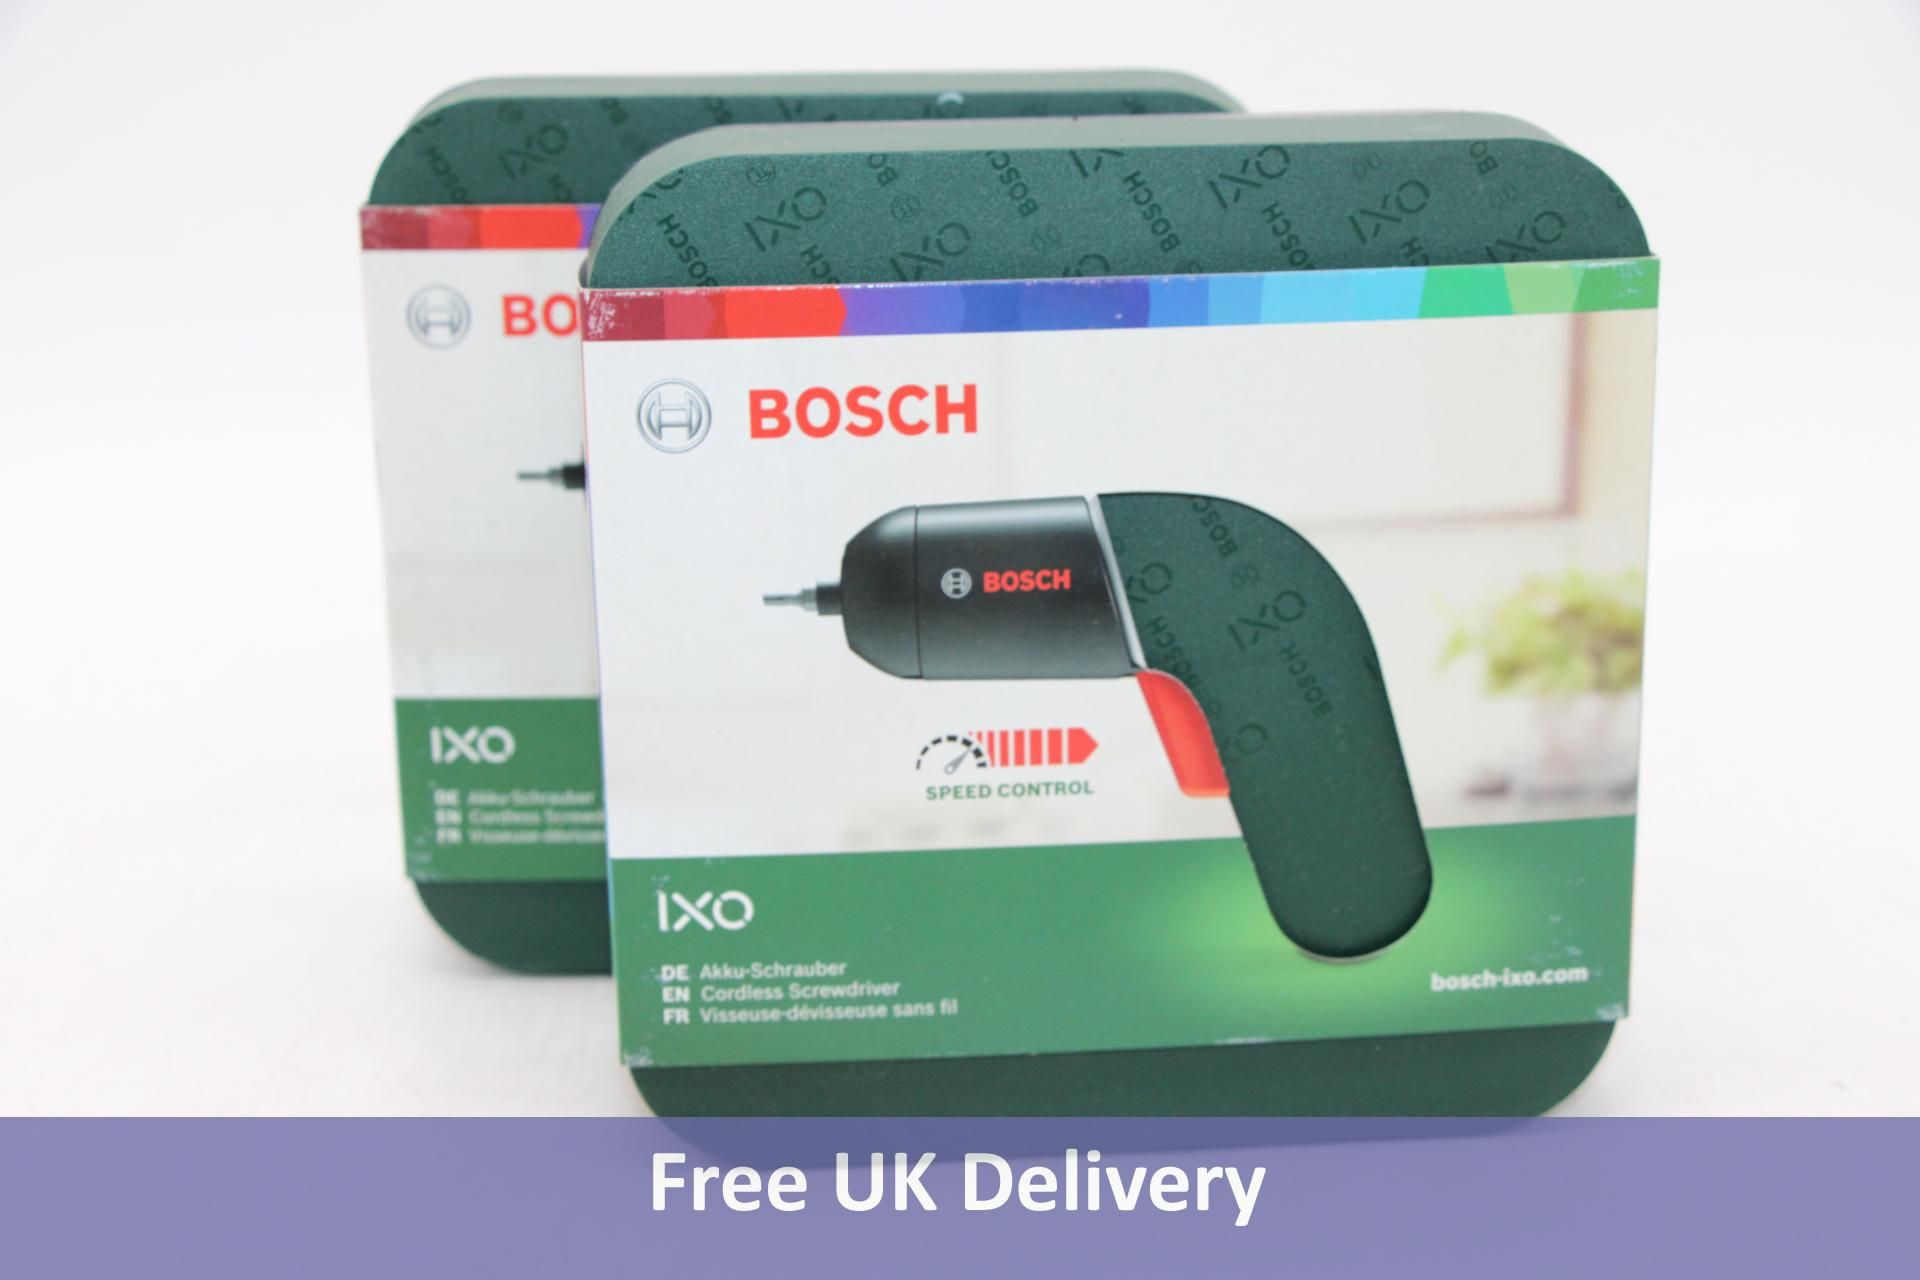 Set of Two Bosch IXO Speed Control Cordless Screwdrivers